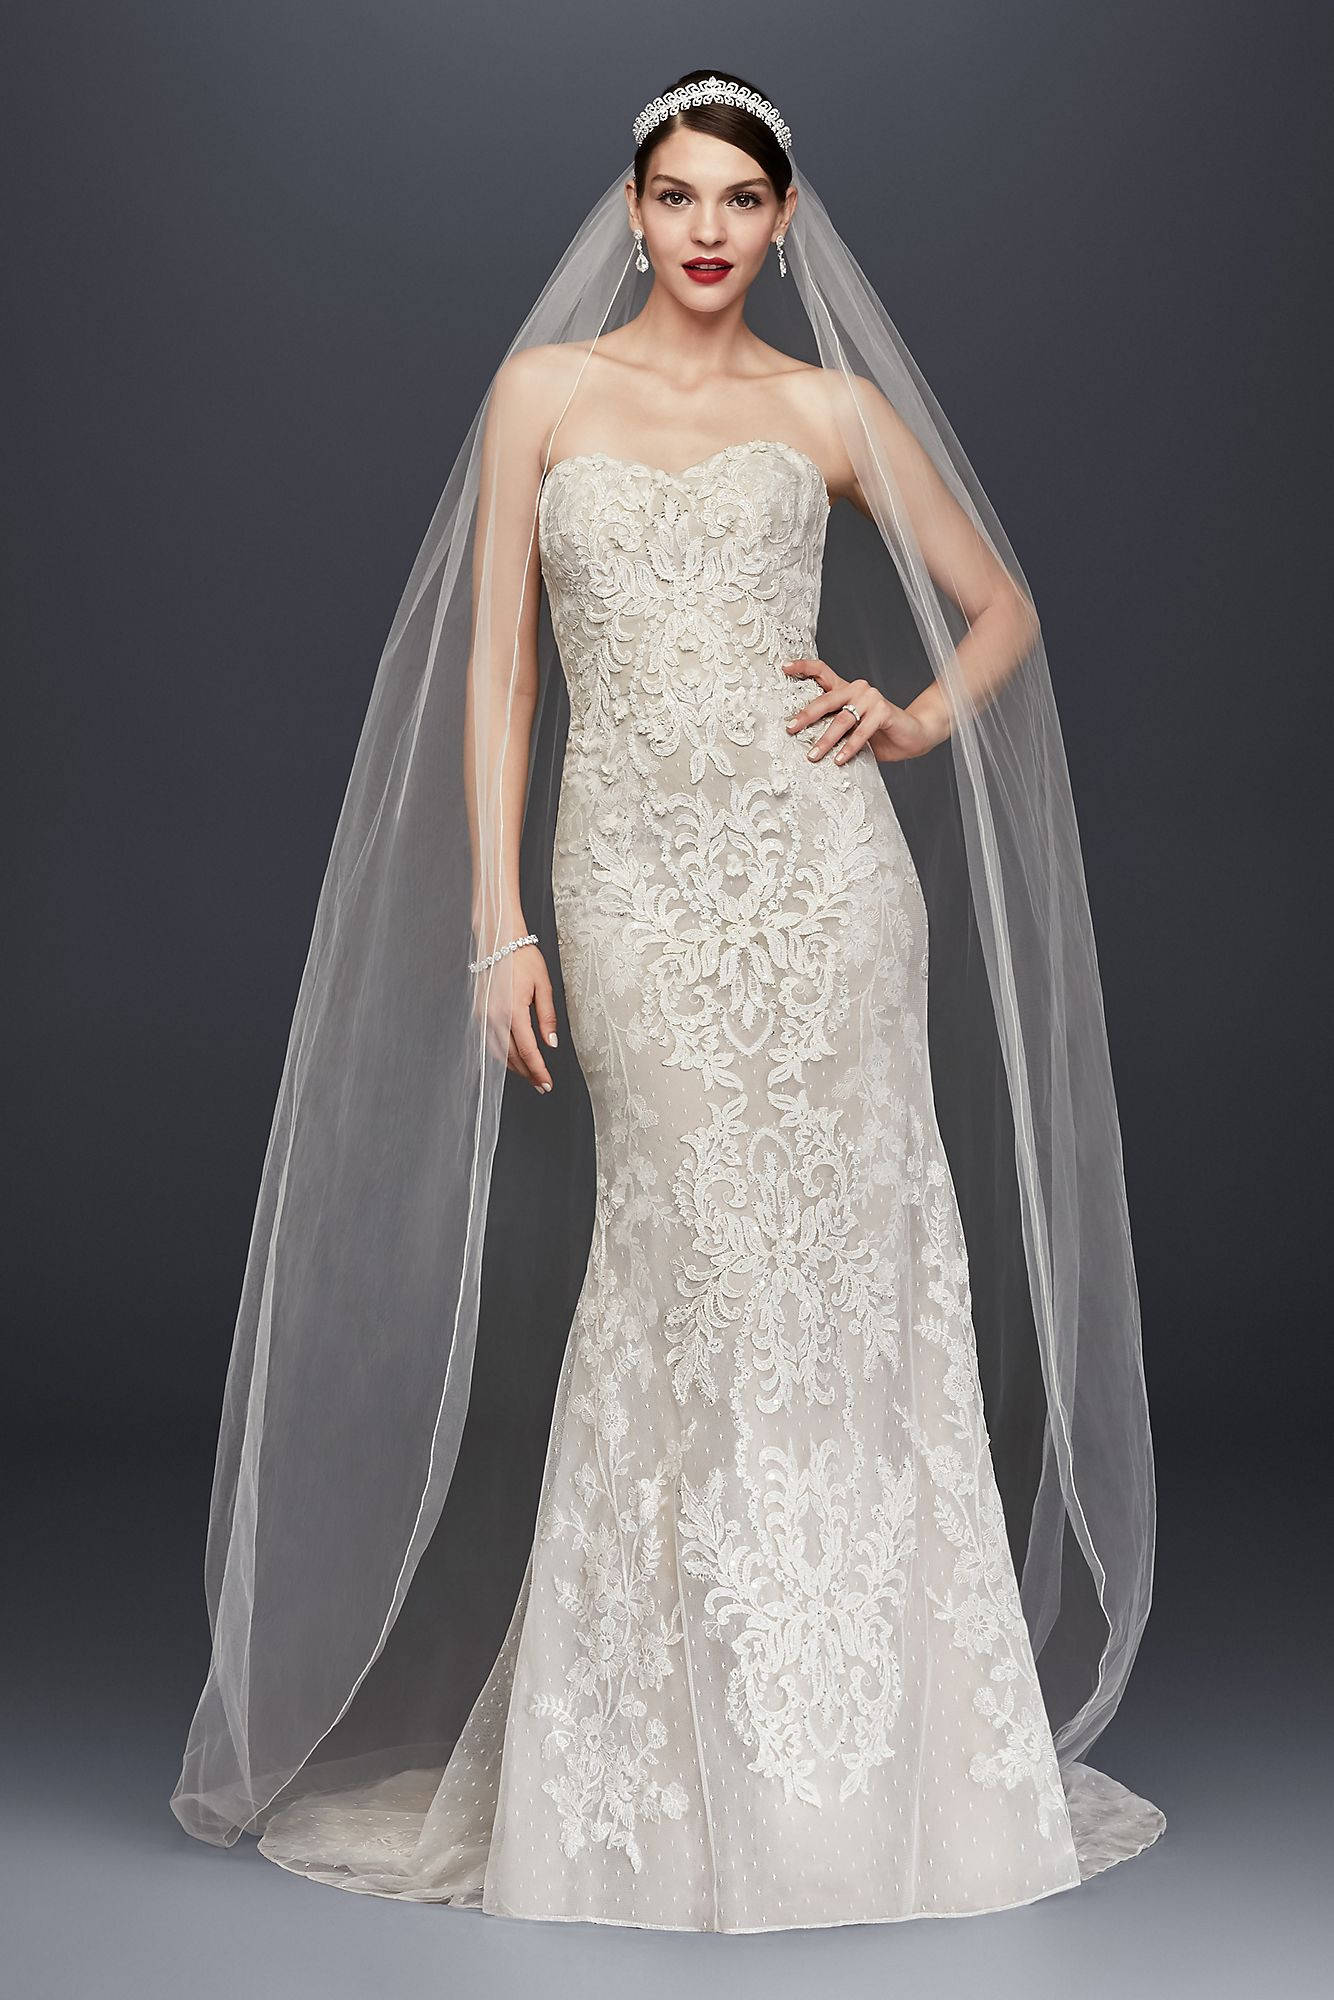 Lace Sheath Wedding Dress
 Strapless Sheath Wedding Dress with Lace Applique